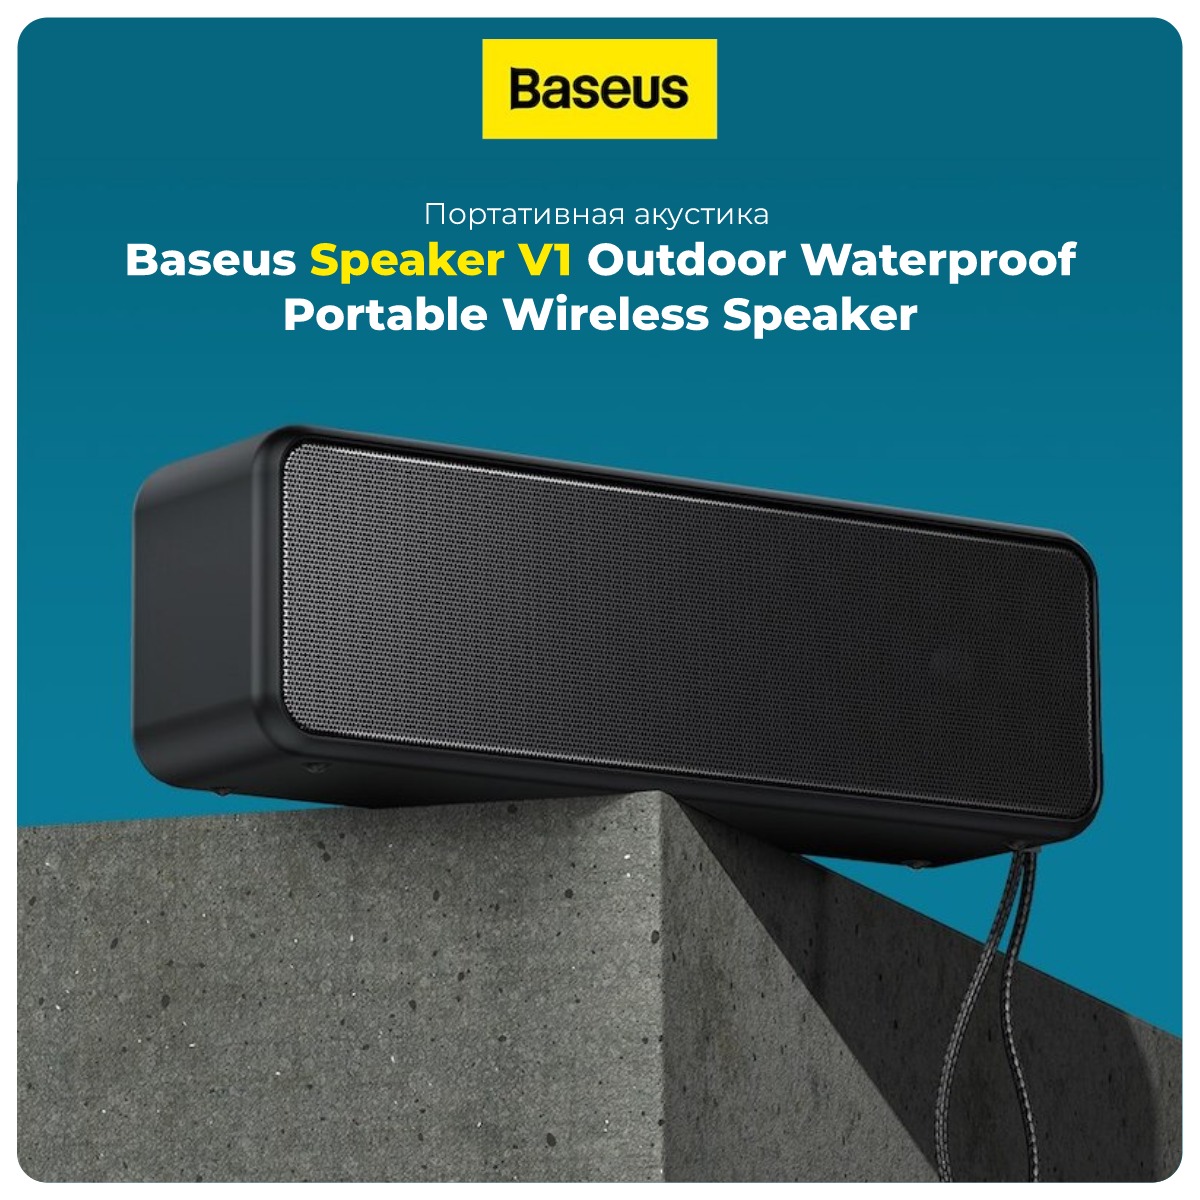 Baseus-Speaker-V1-Outdoor-Waterproof-Portable-Wireless-Speaker-WSVY000101-01